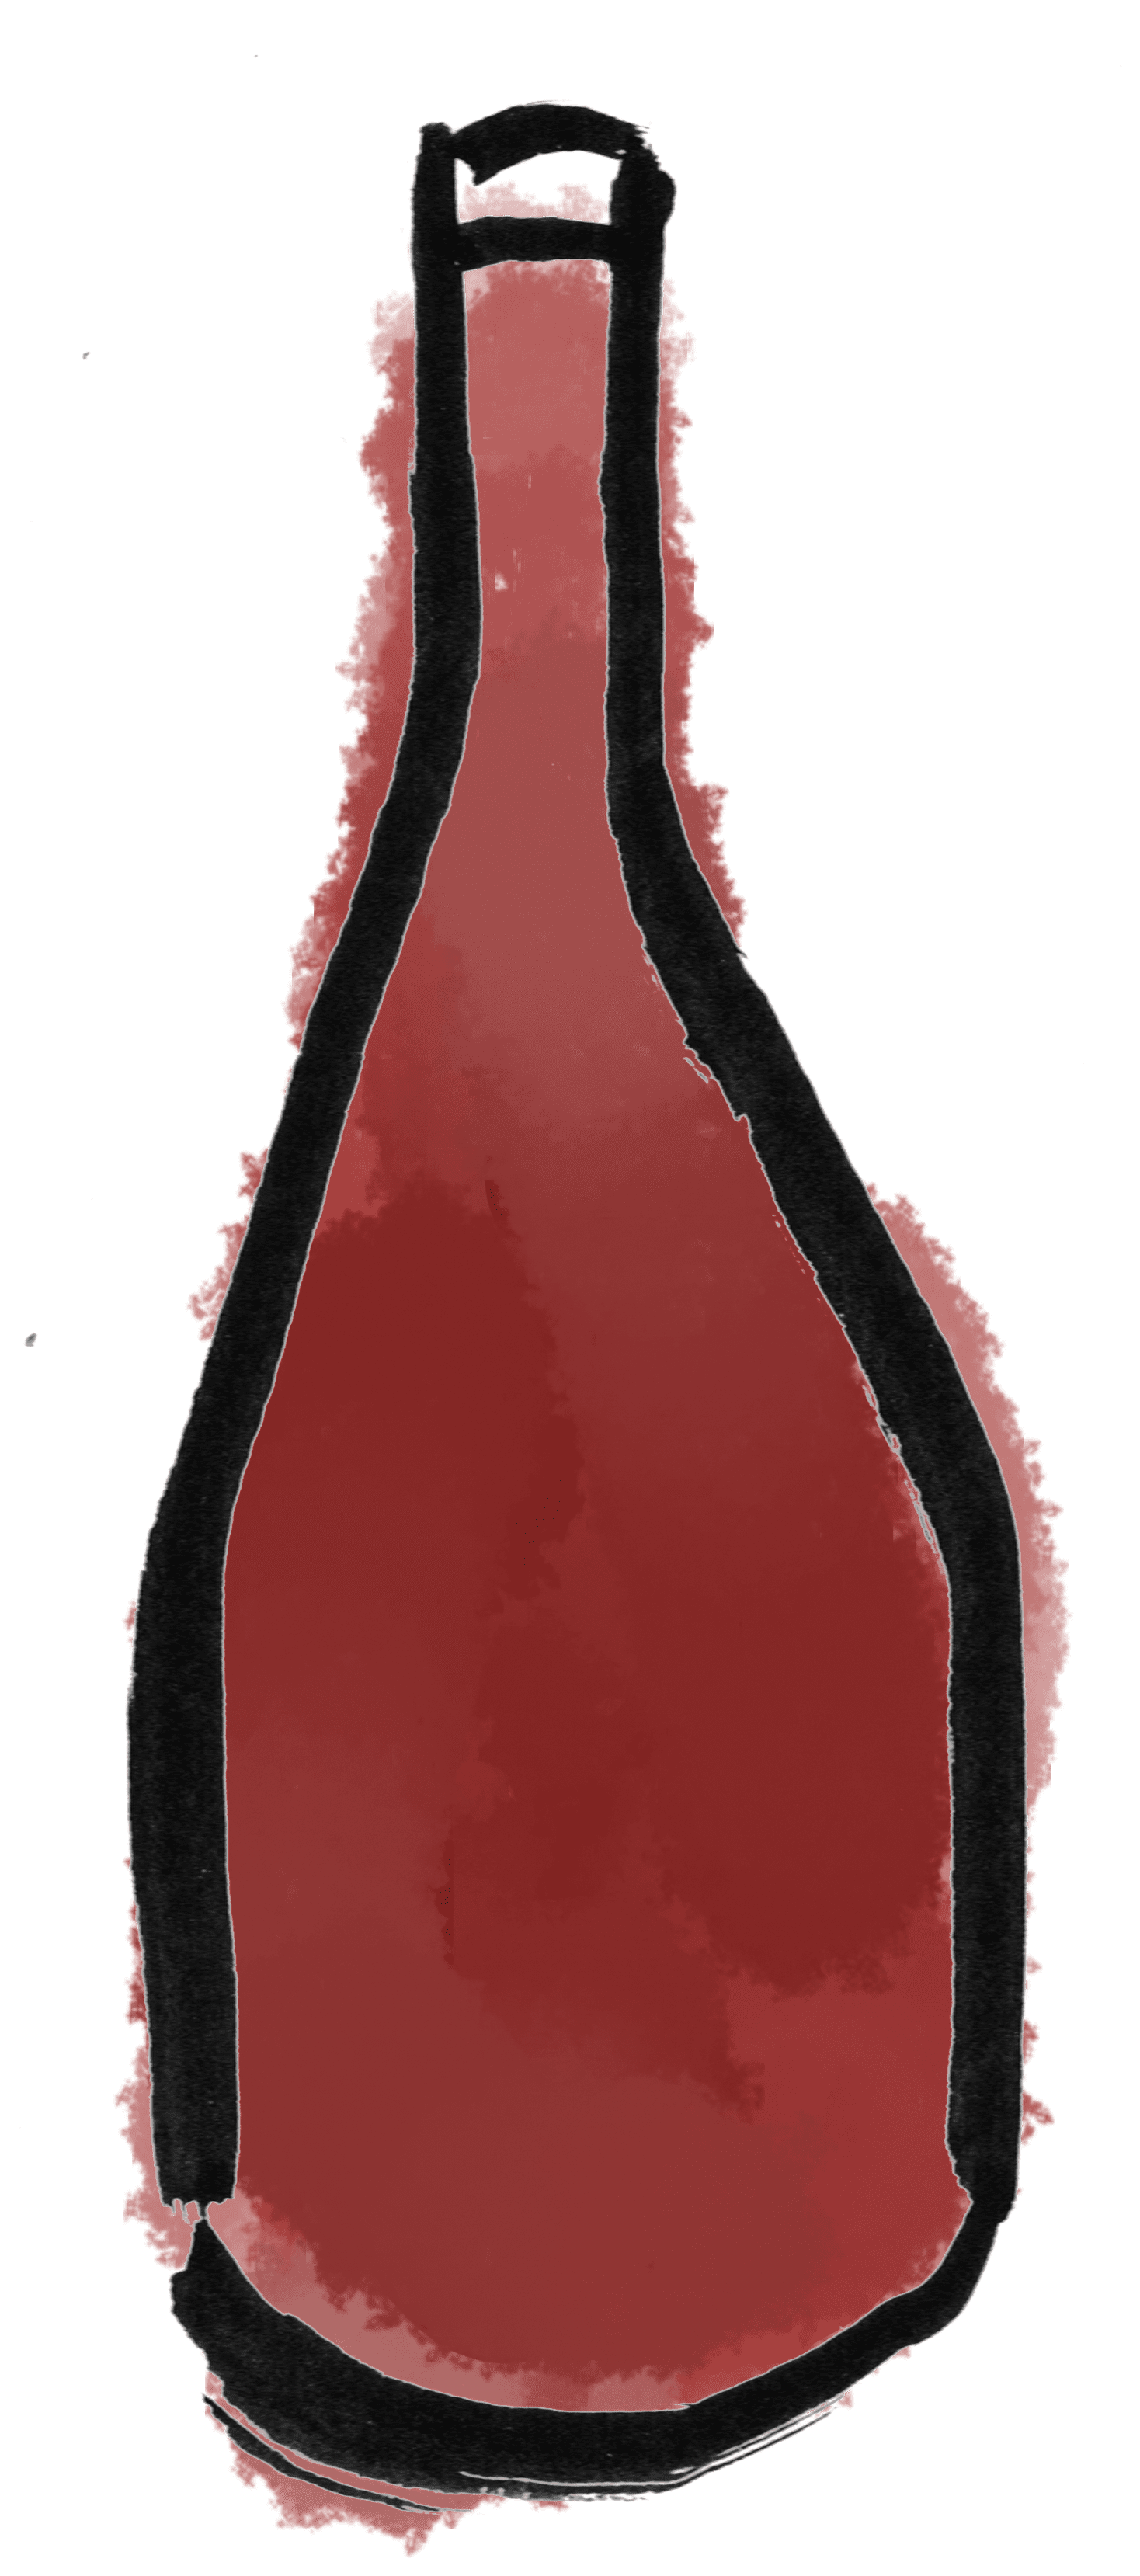 Dessin bouteille vin rouge